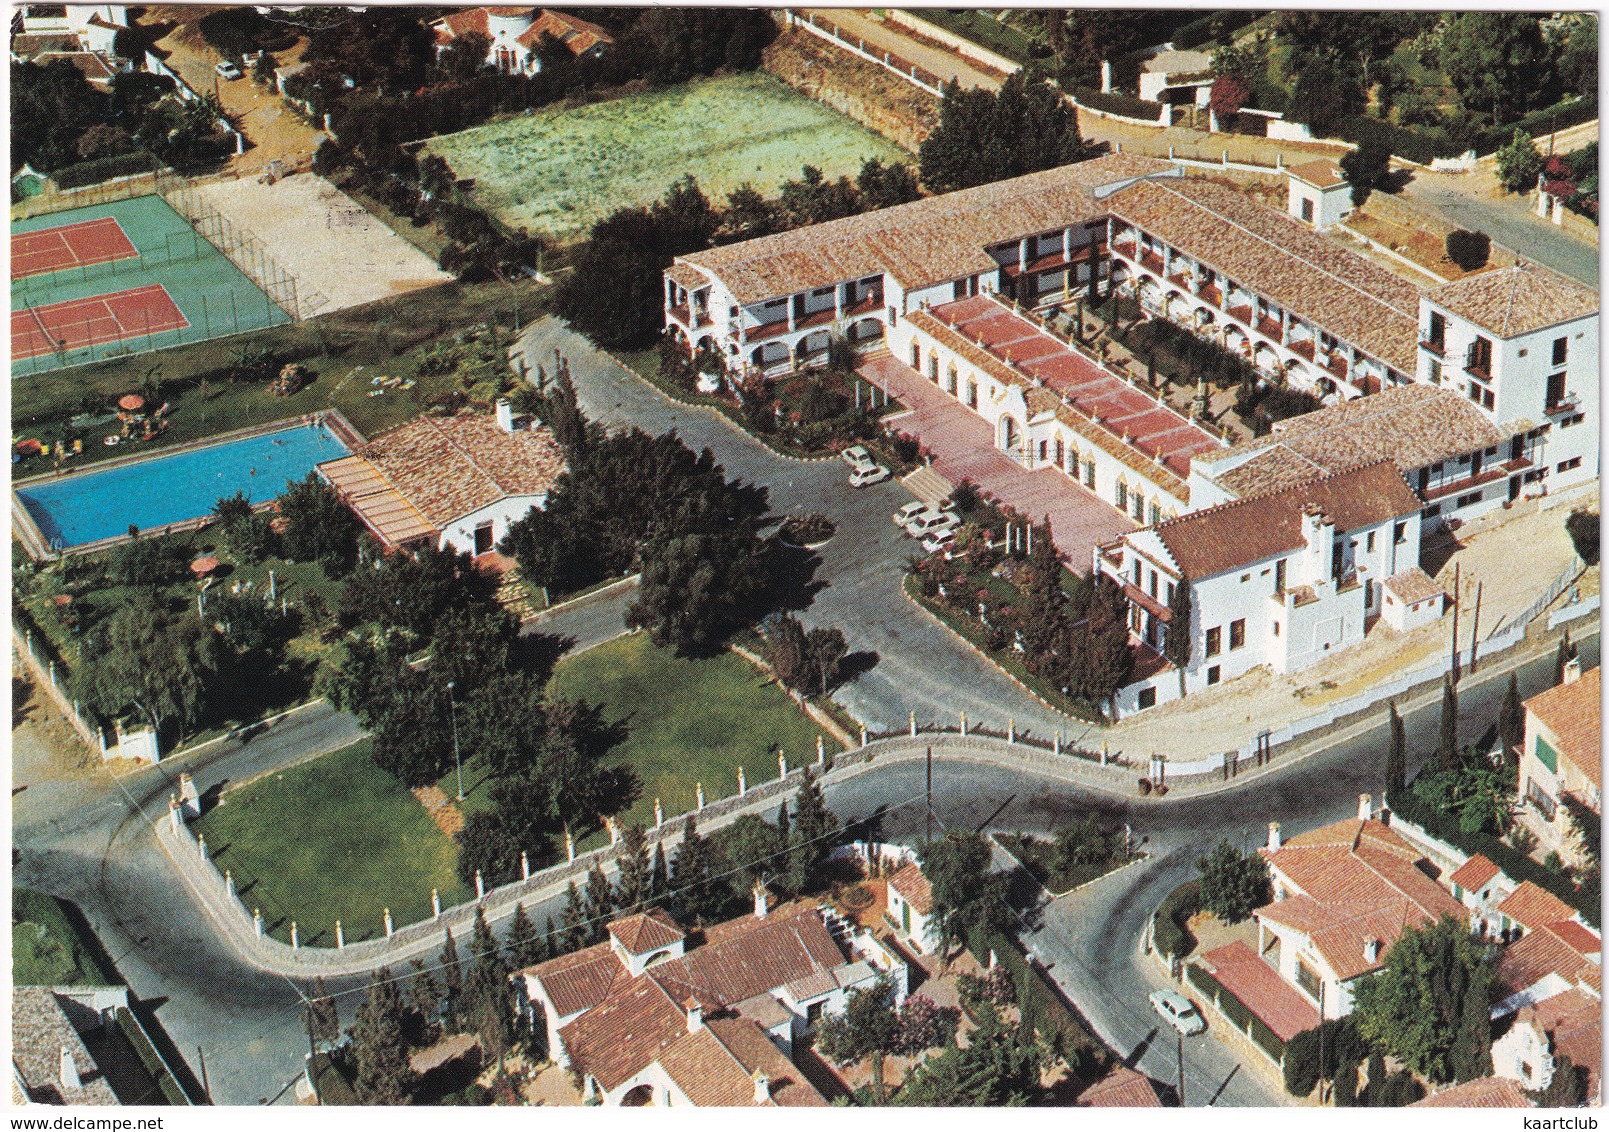 TENNIS COURT - Torremolinos - Hotel 'Montemar' - Swimmingpool - Aerial View - (Espana/Spain) - Tennis